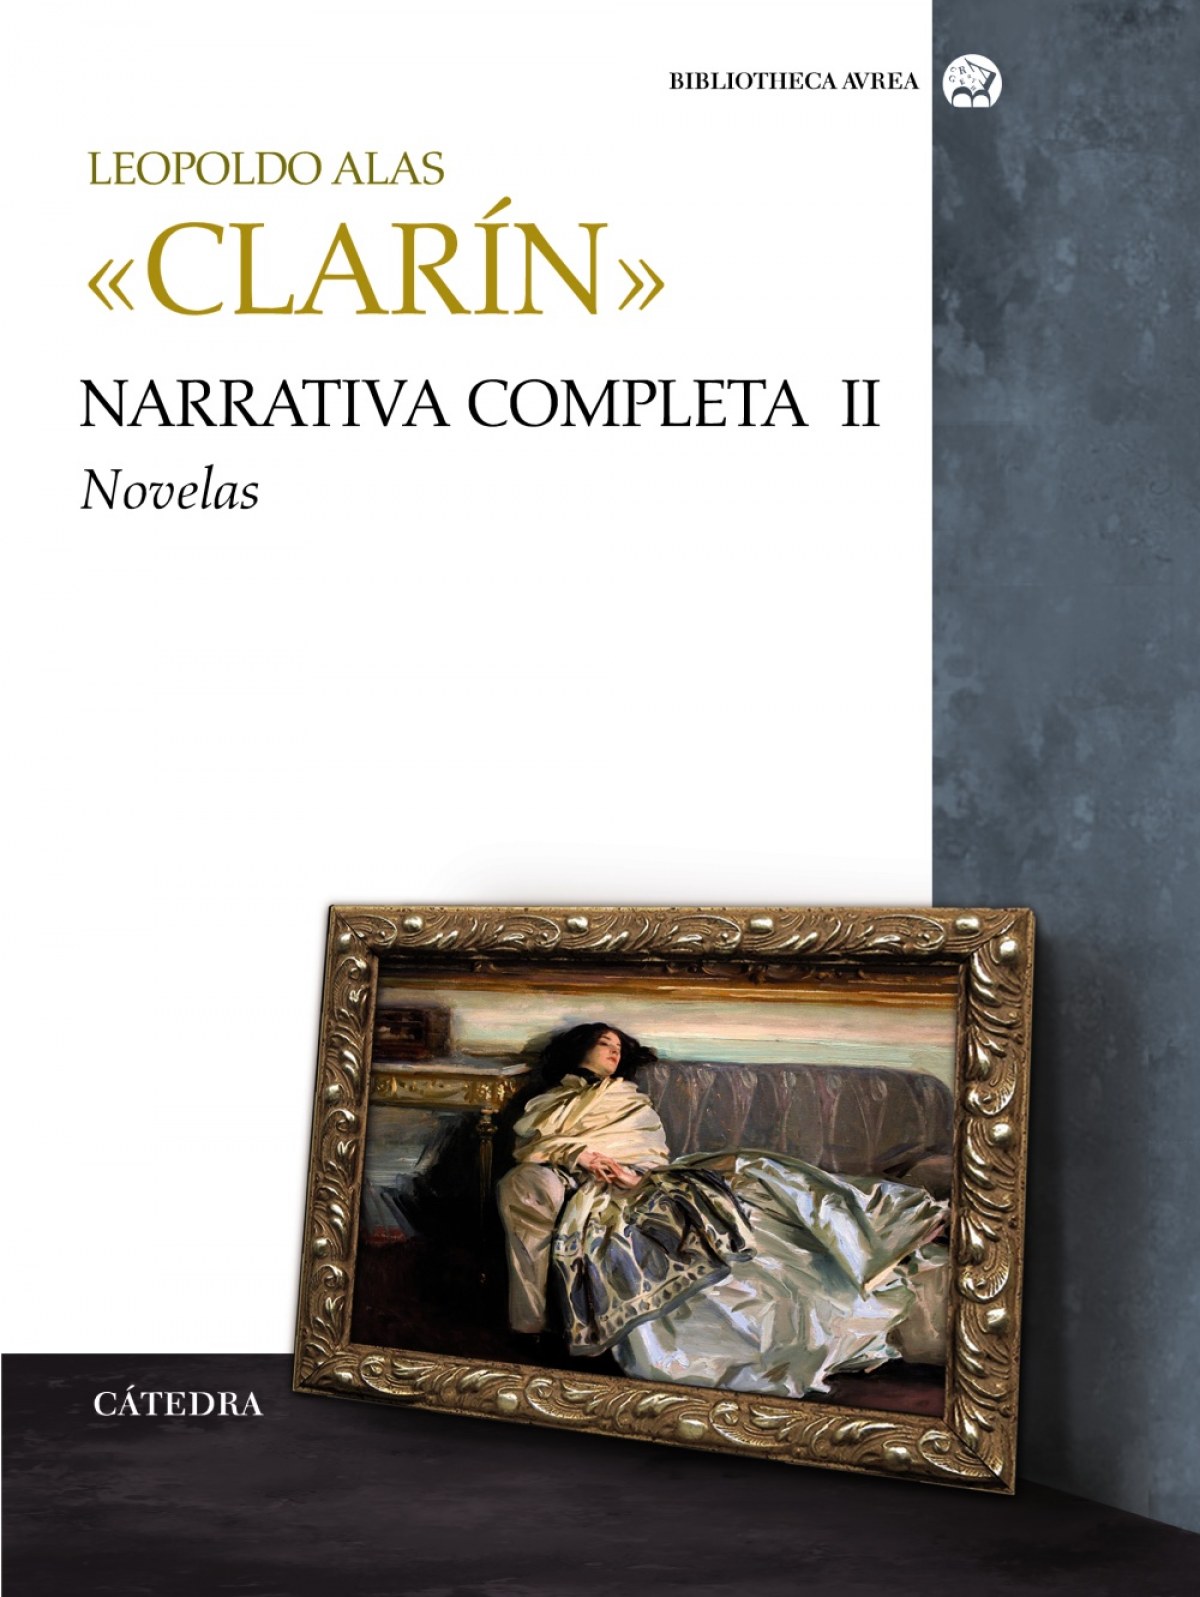 Narrativa completa. Volumen II Novelas - «Clarín», Leopoldo Alas